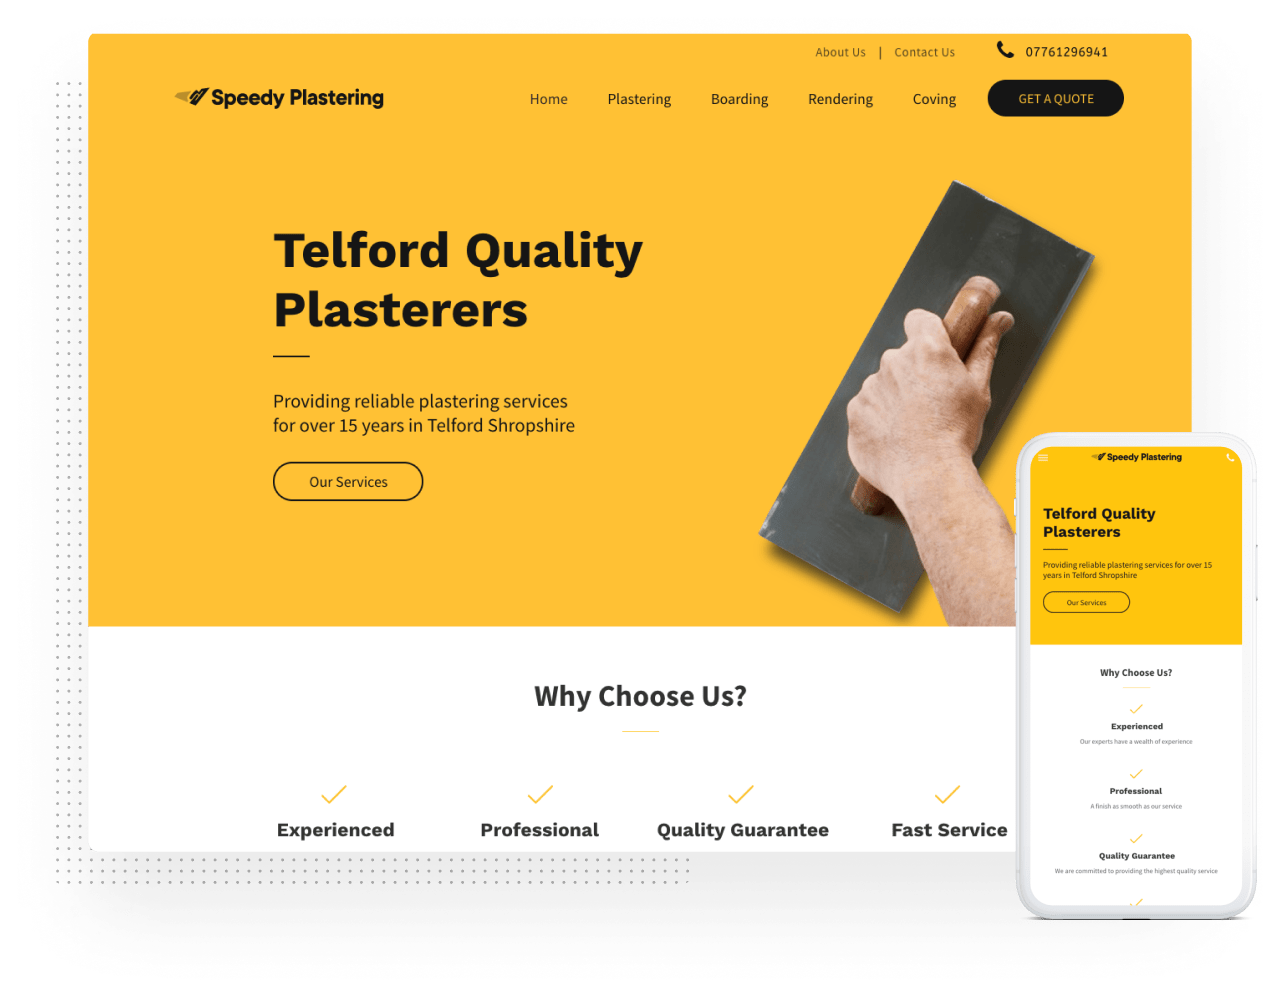 speedy plastering procredible website design